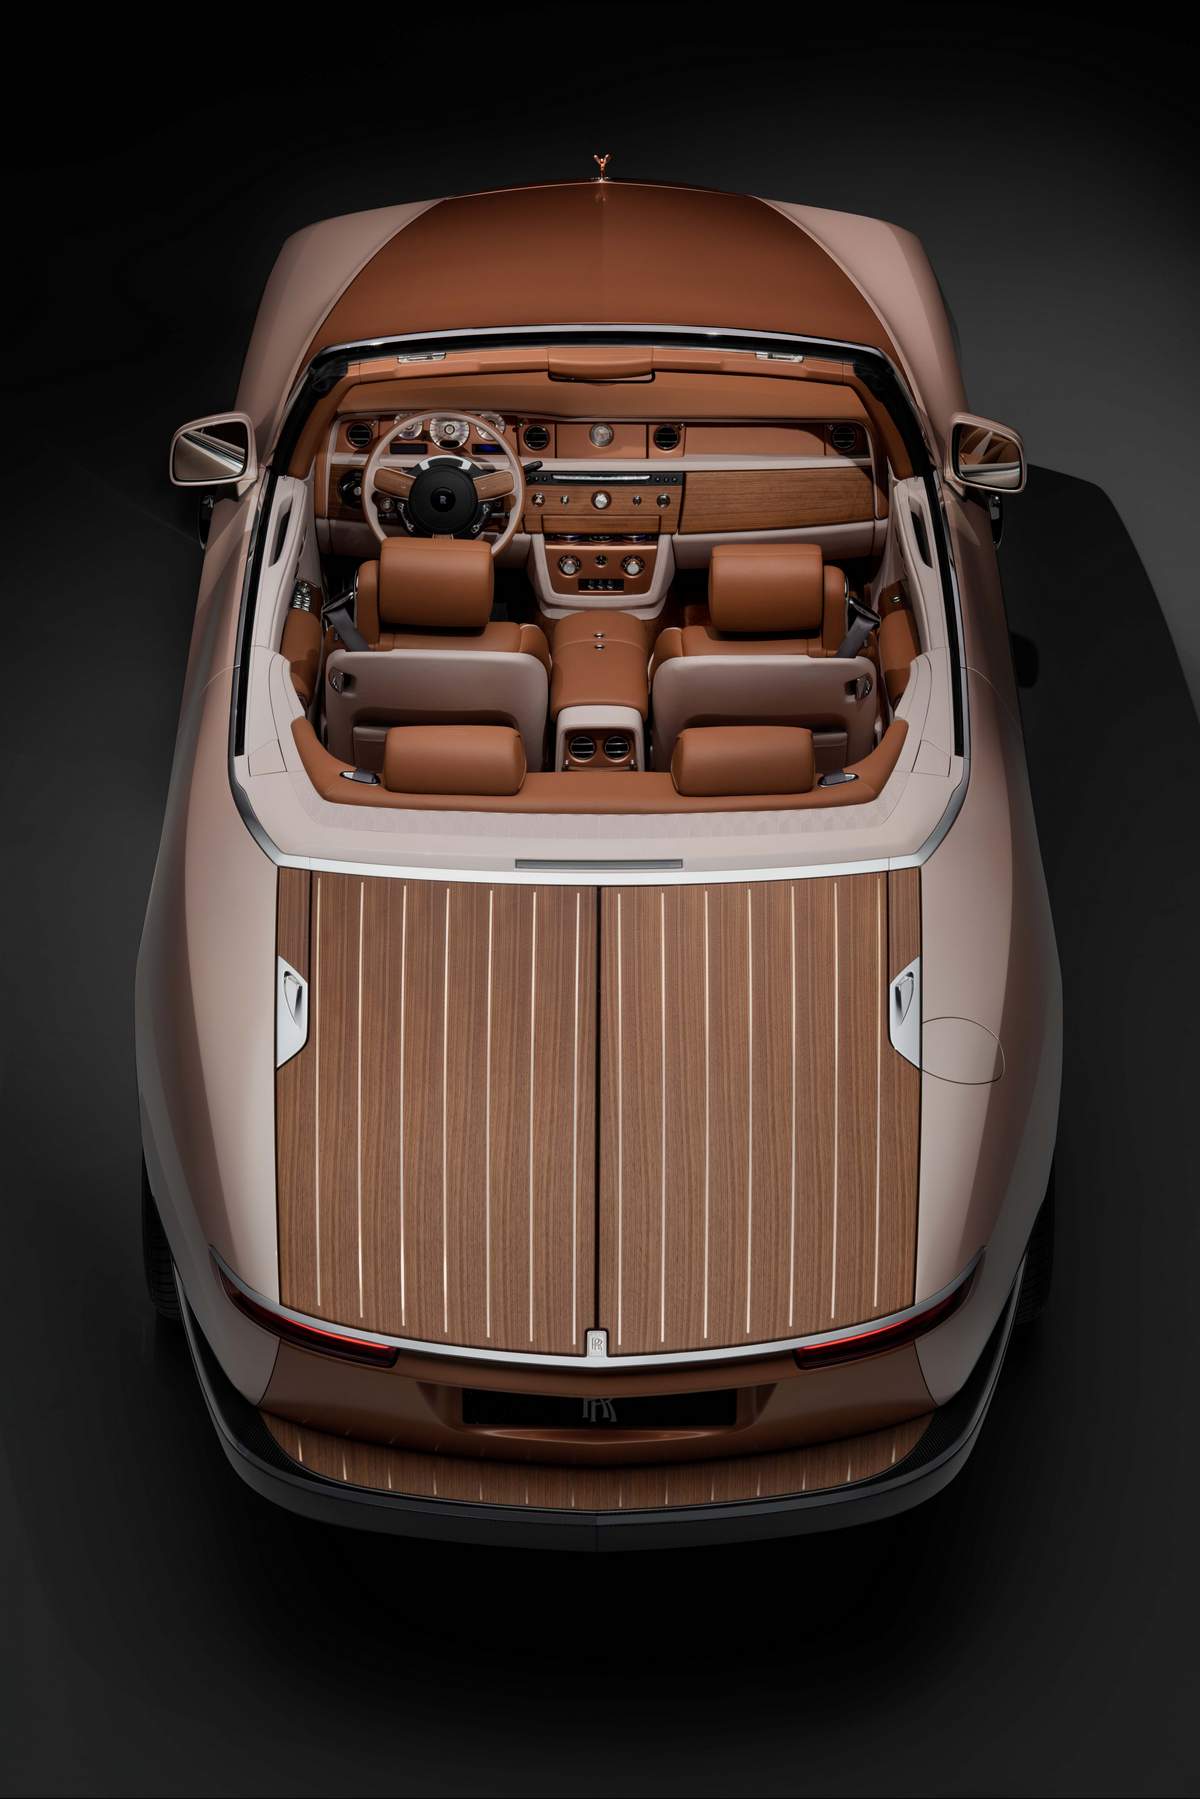 Rolls-Royce 'Boat Tail' Makes Global Debut At Prestigious Villa D'Este